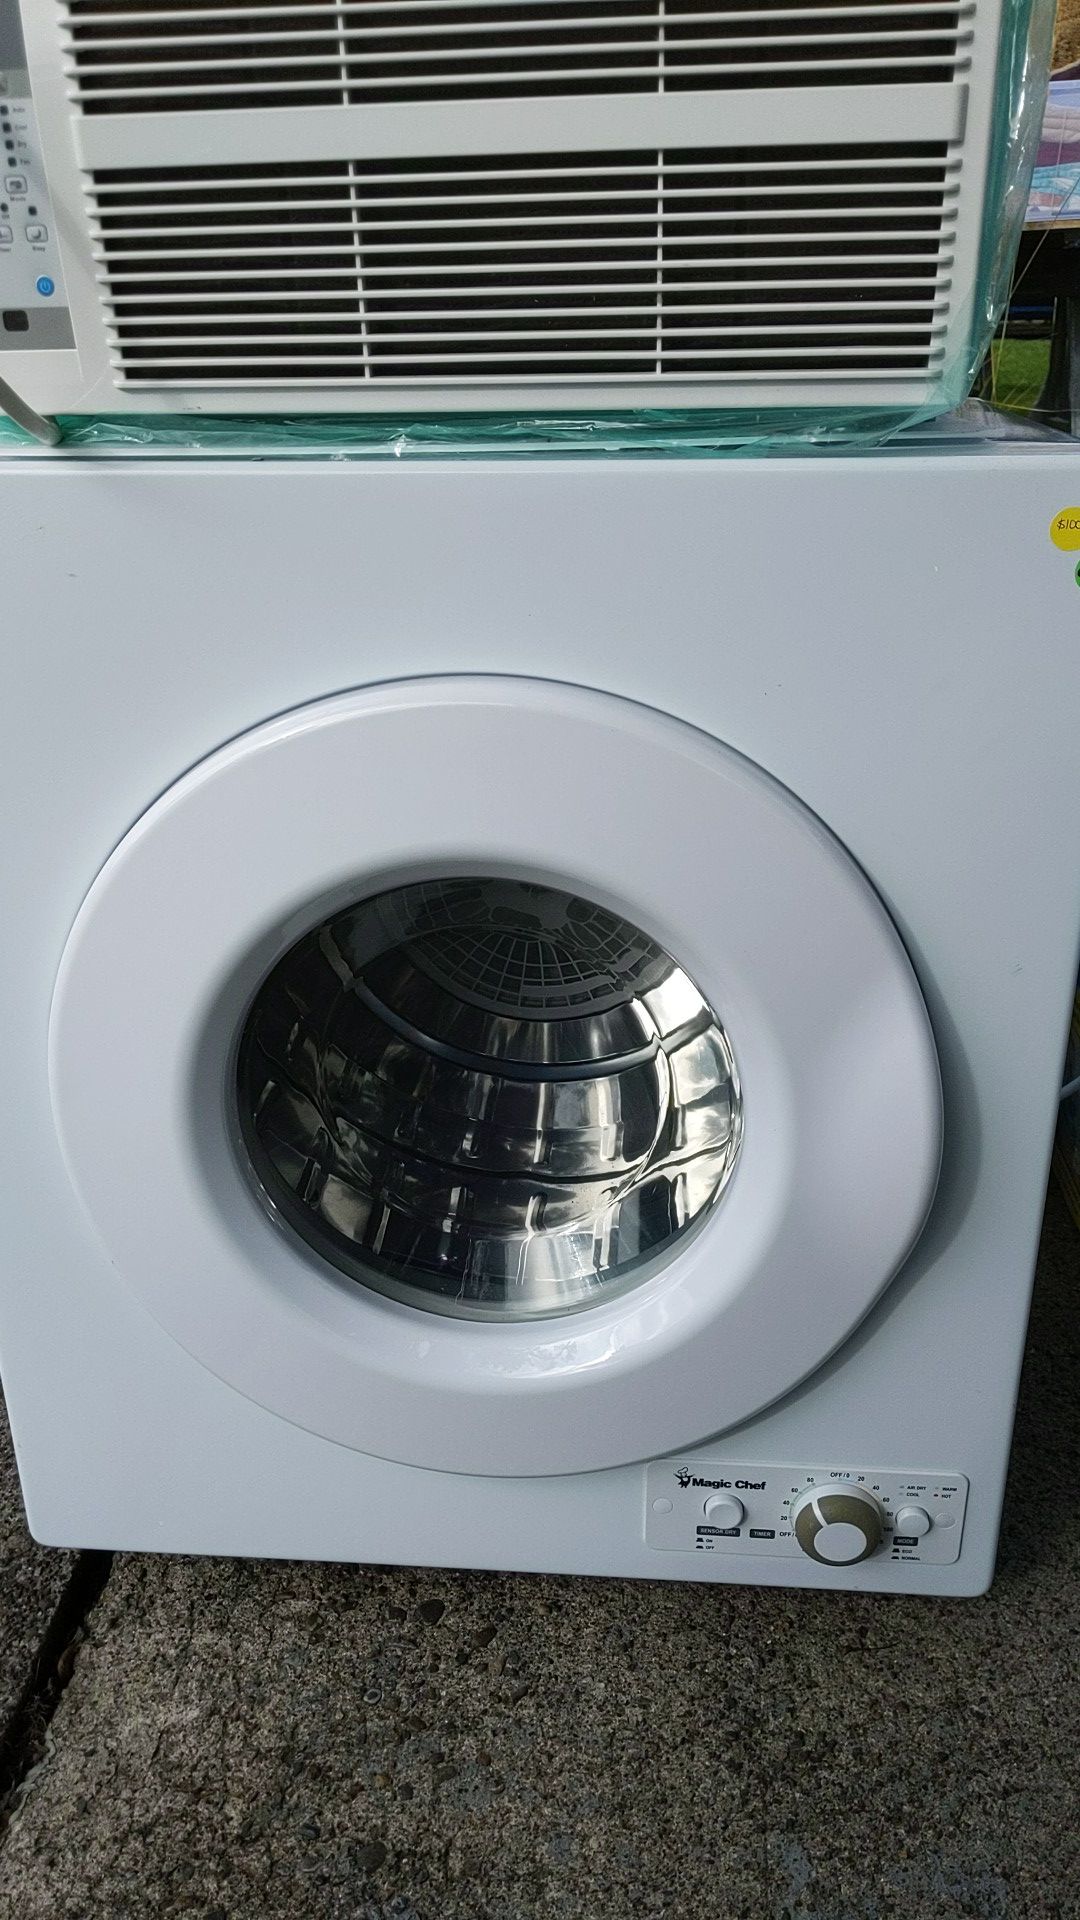 Portable dryer magic chef model mcsdry1s